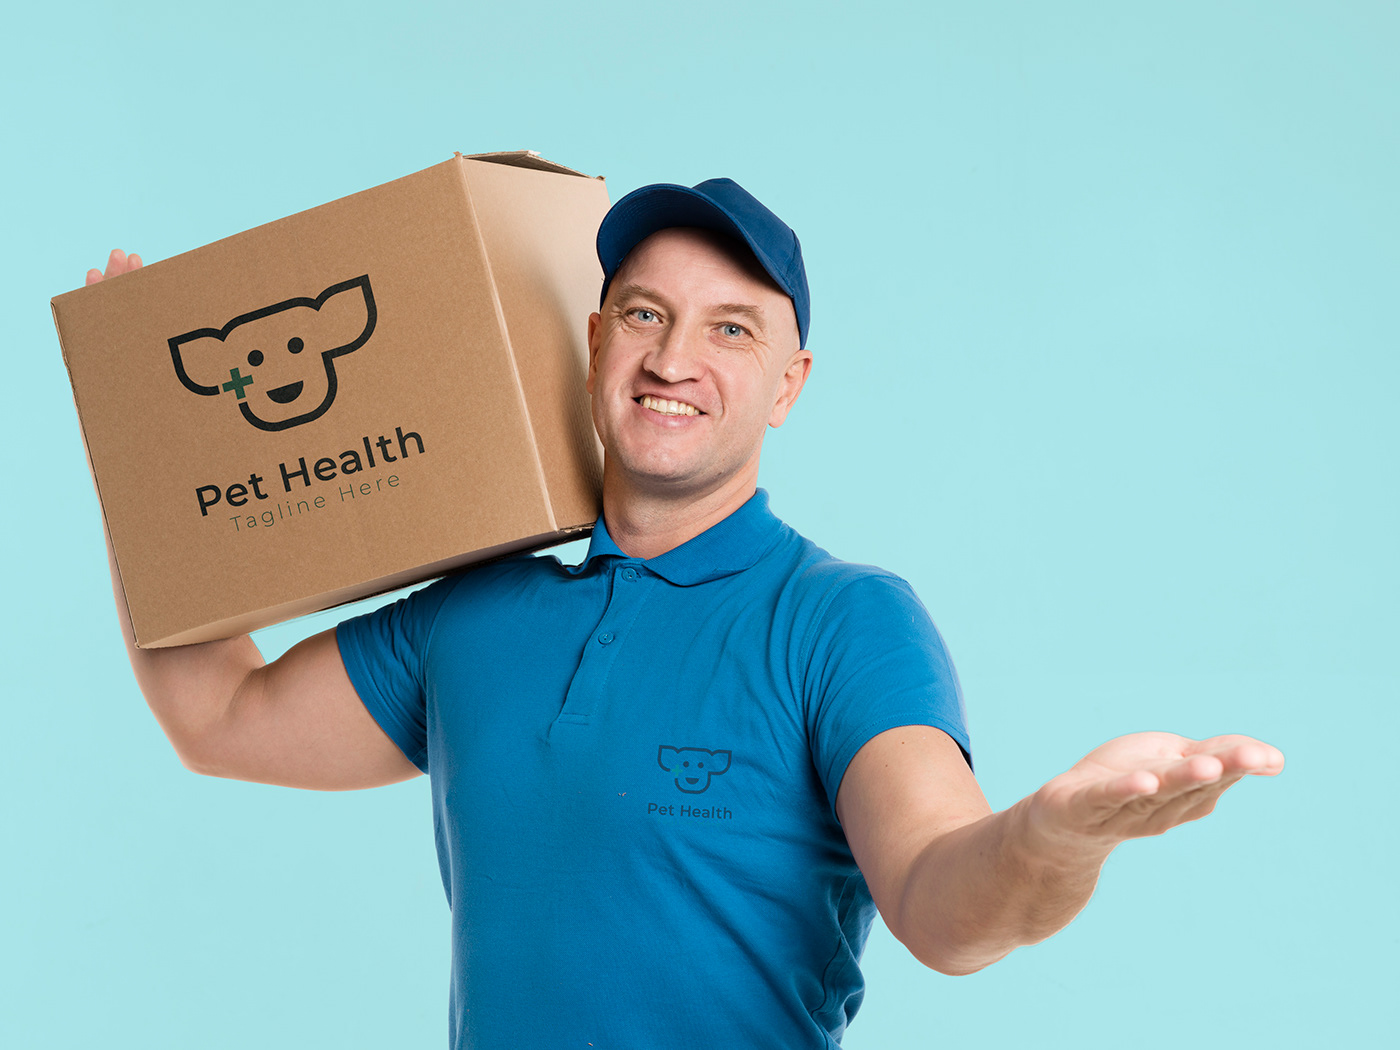 Pet Health Logo